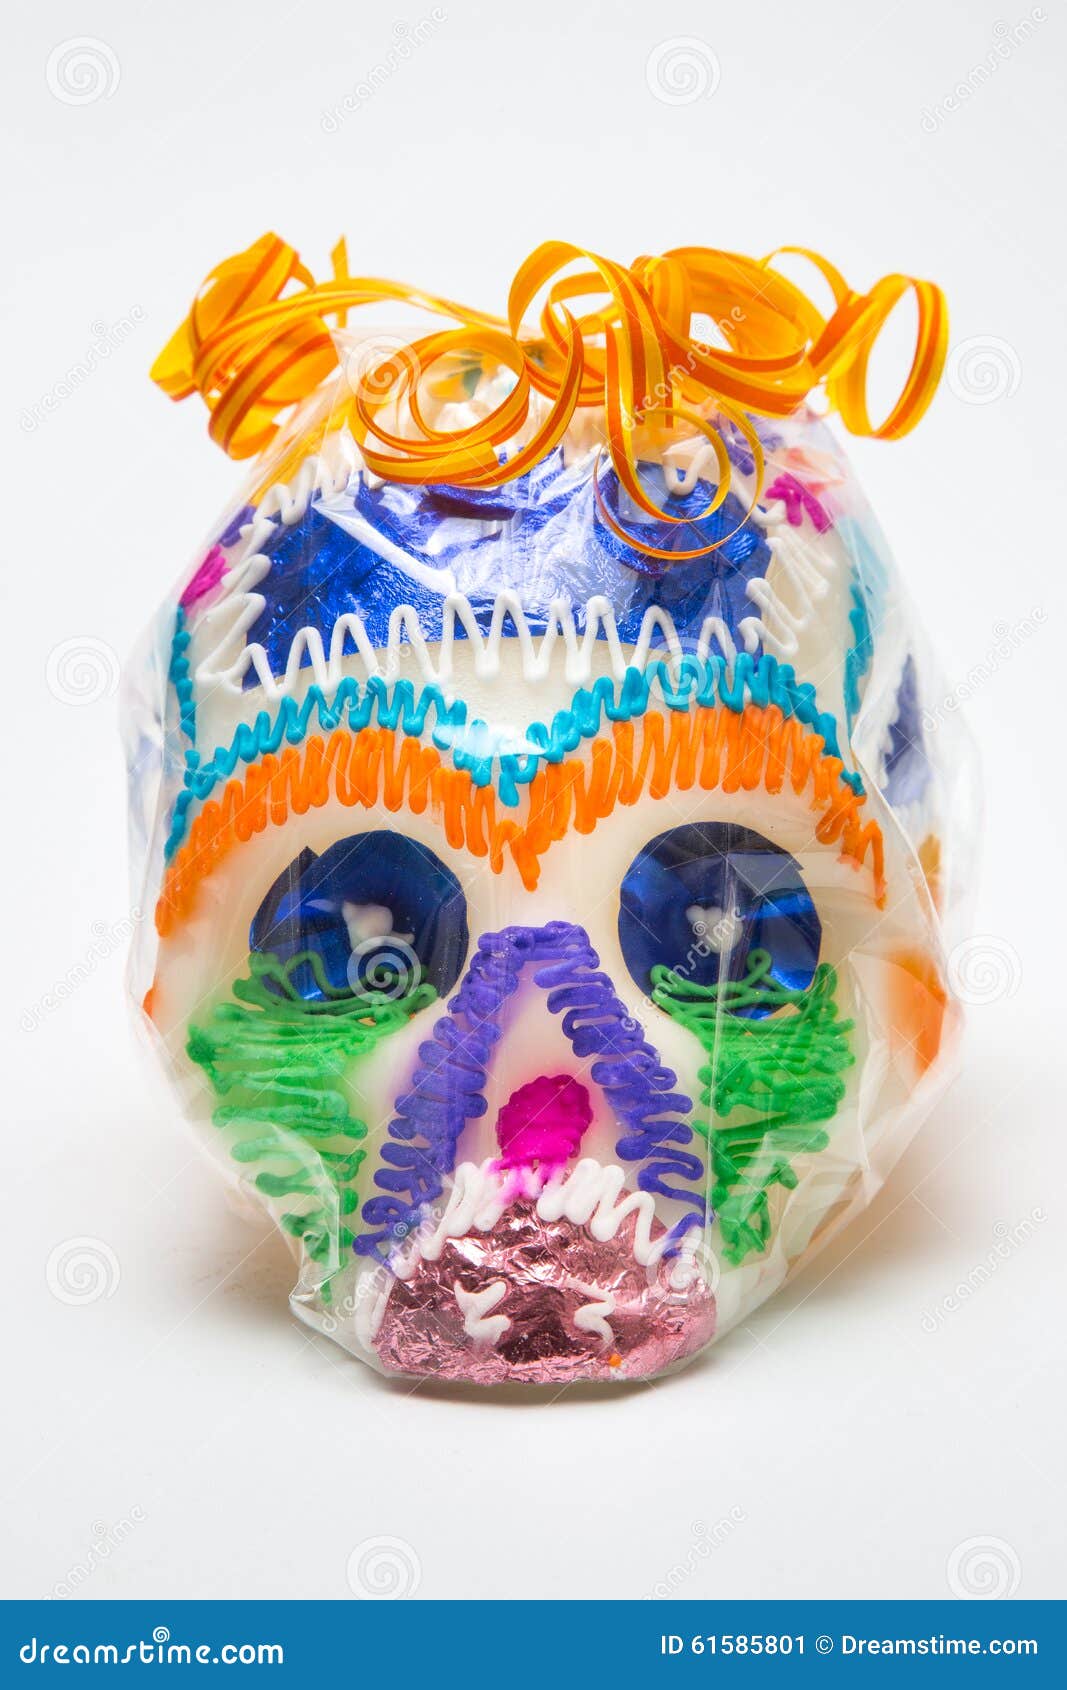 mexican calaverita de azucar candy skull original traditional front in package